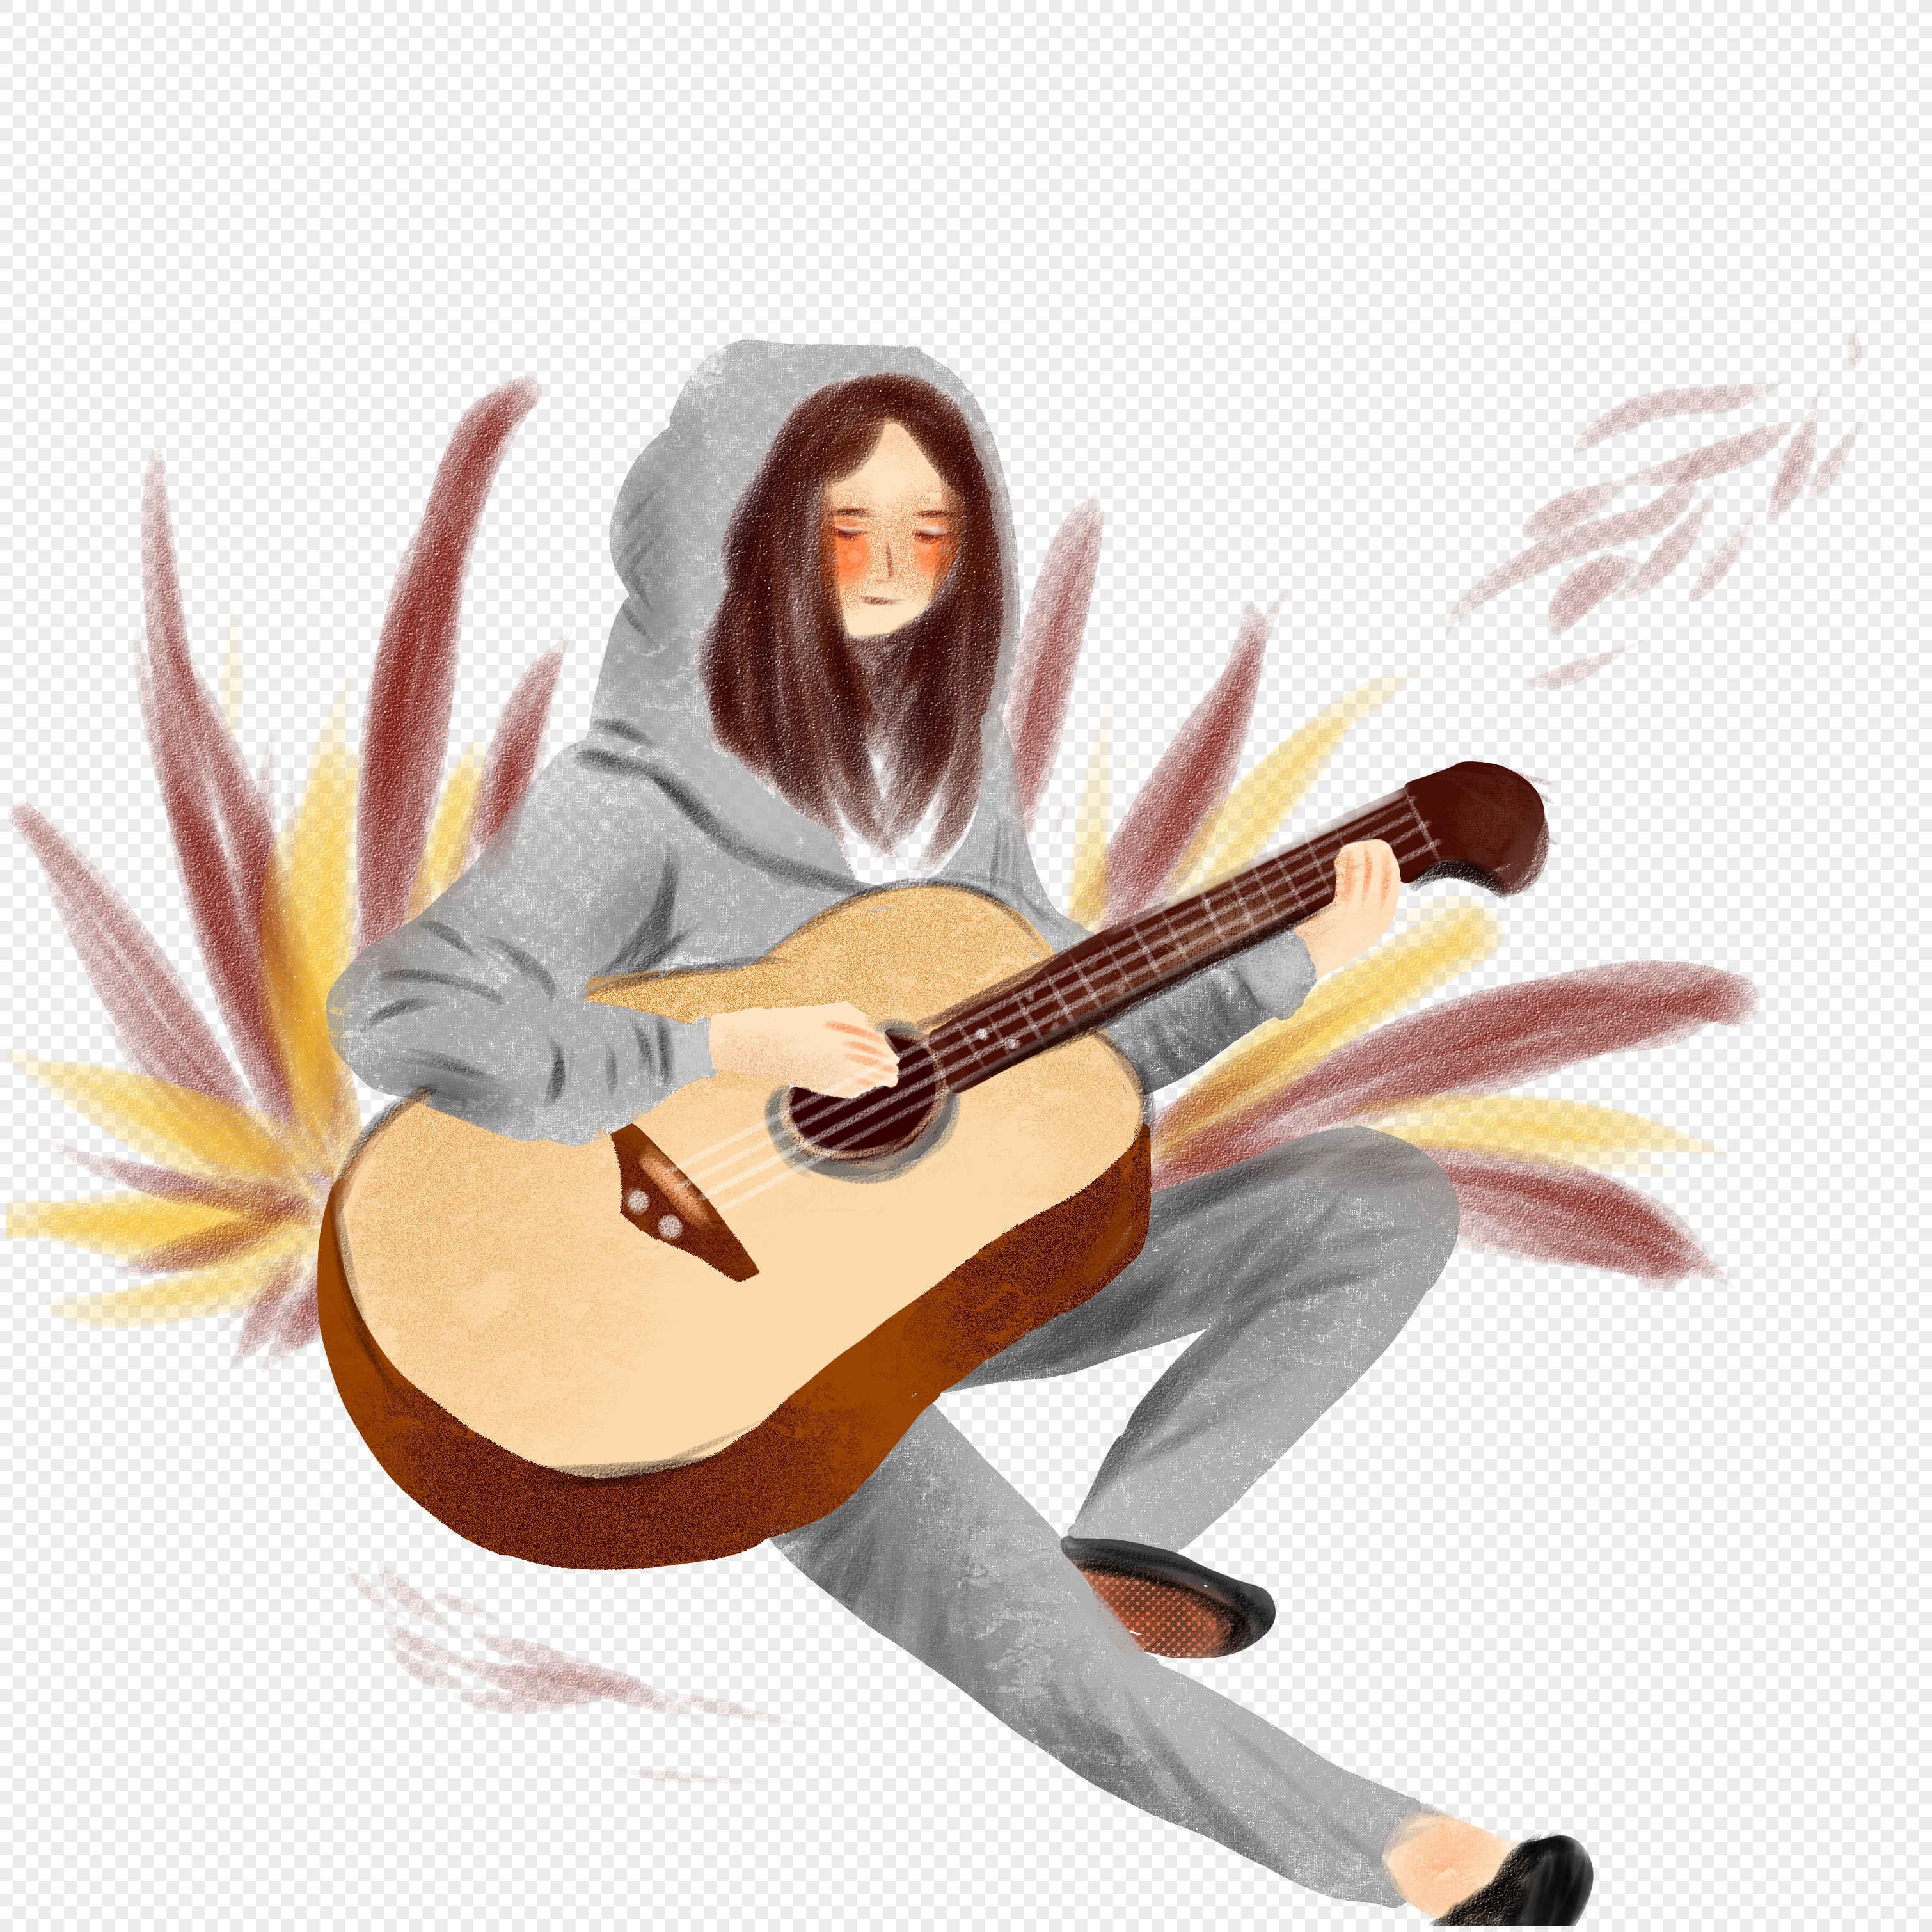 Играющий человек на гитаре рисунок - 51 фото